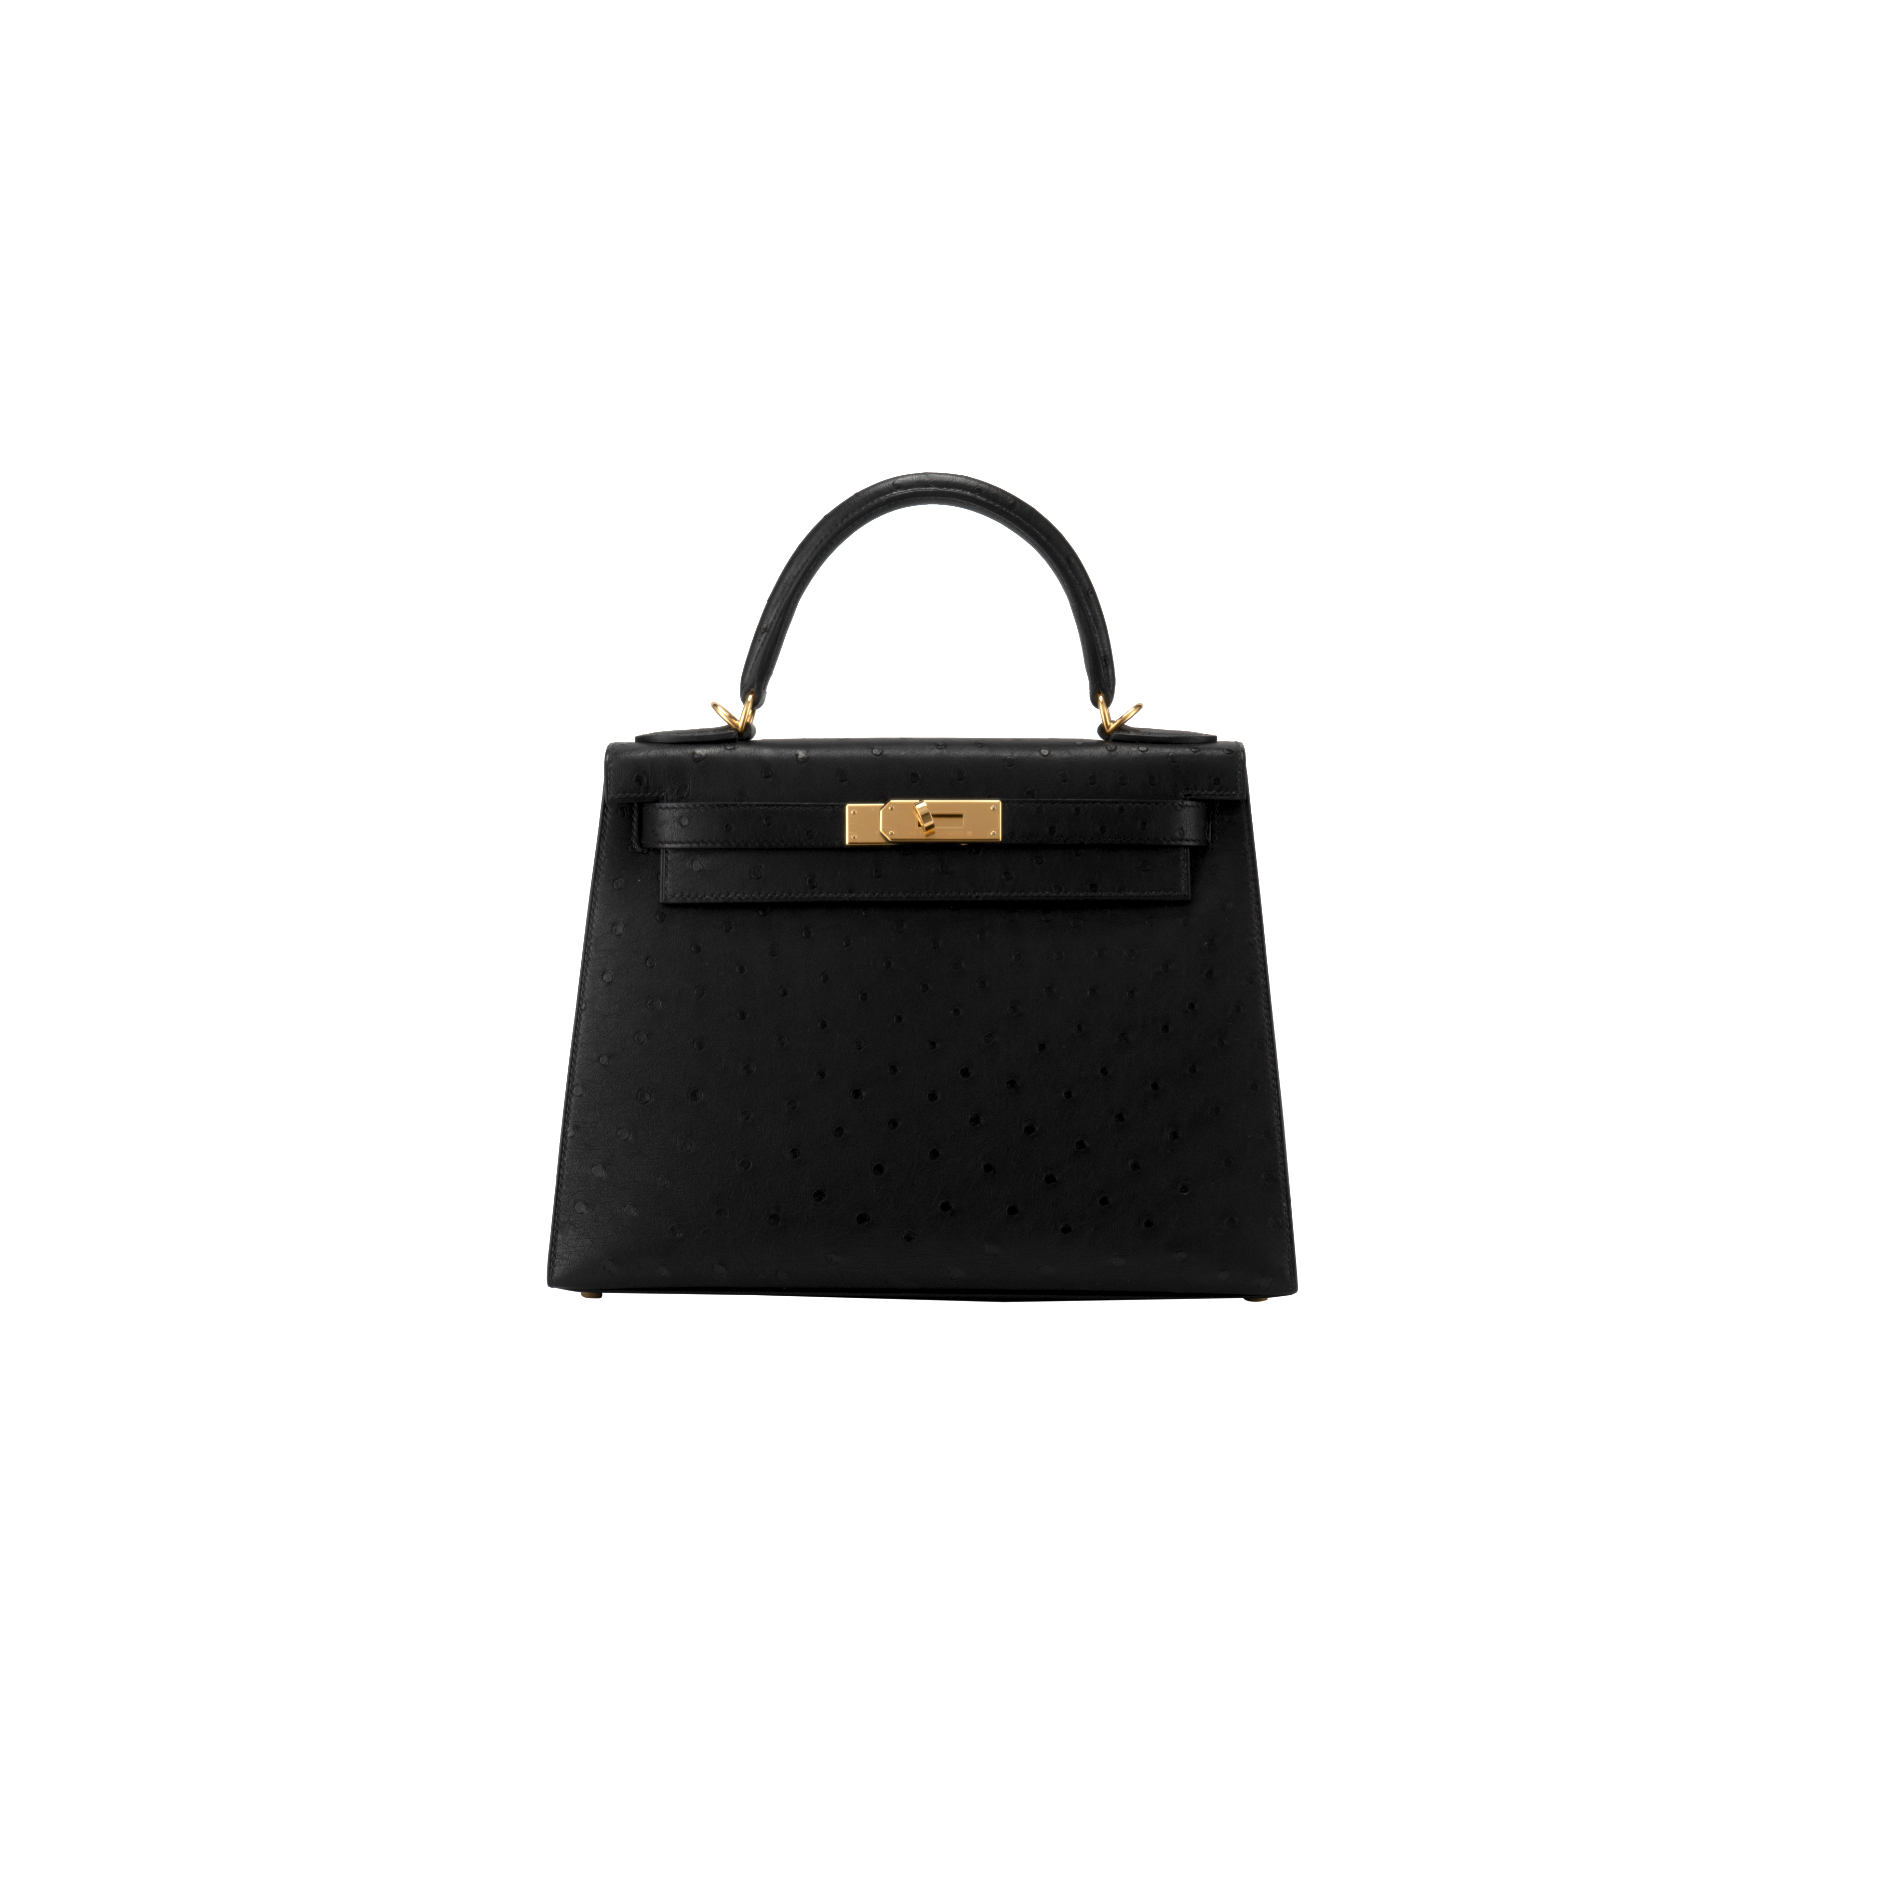 Sold at Auction: Hermes Birkin 25 Bag, Vert Rousseau Togo Leather